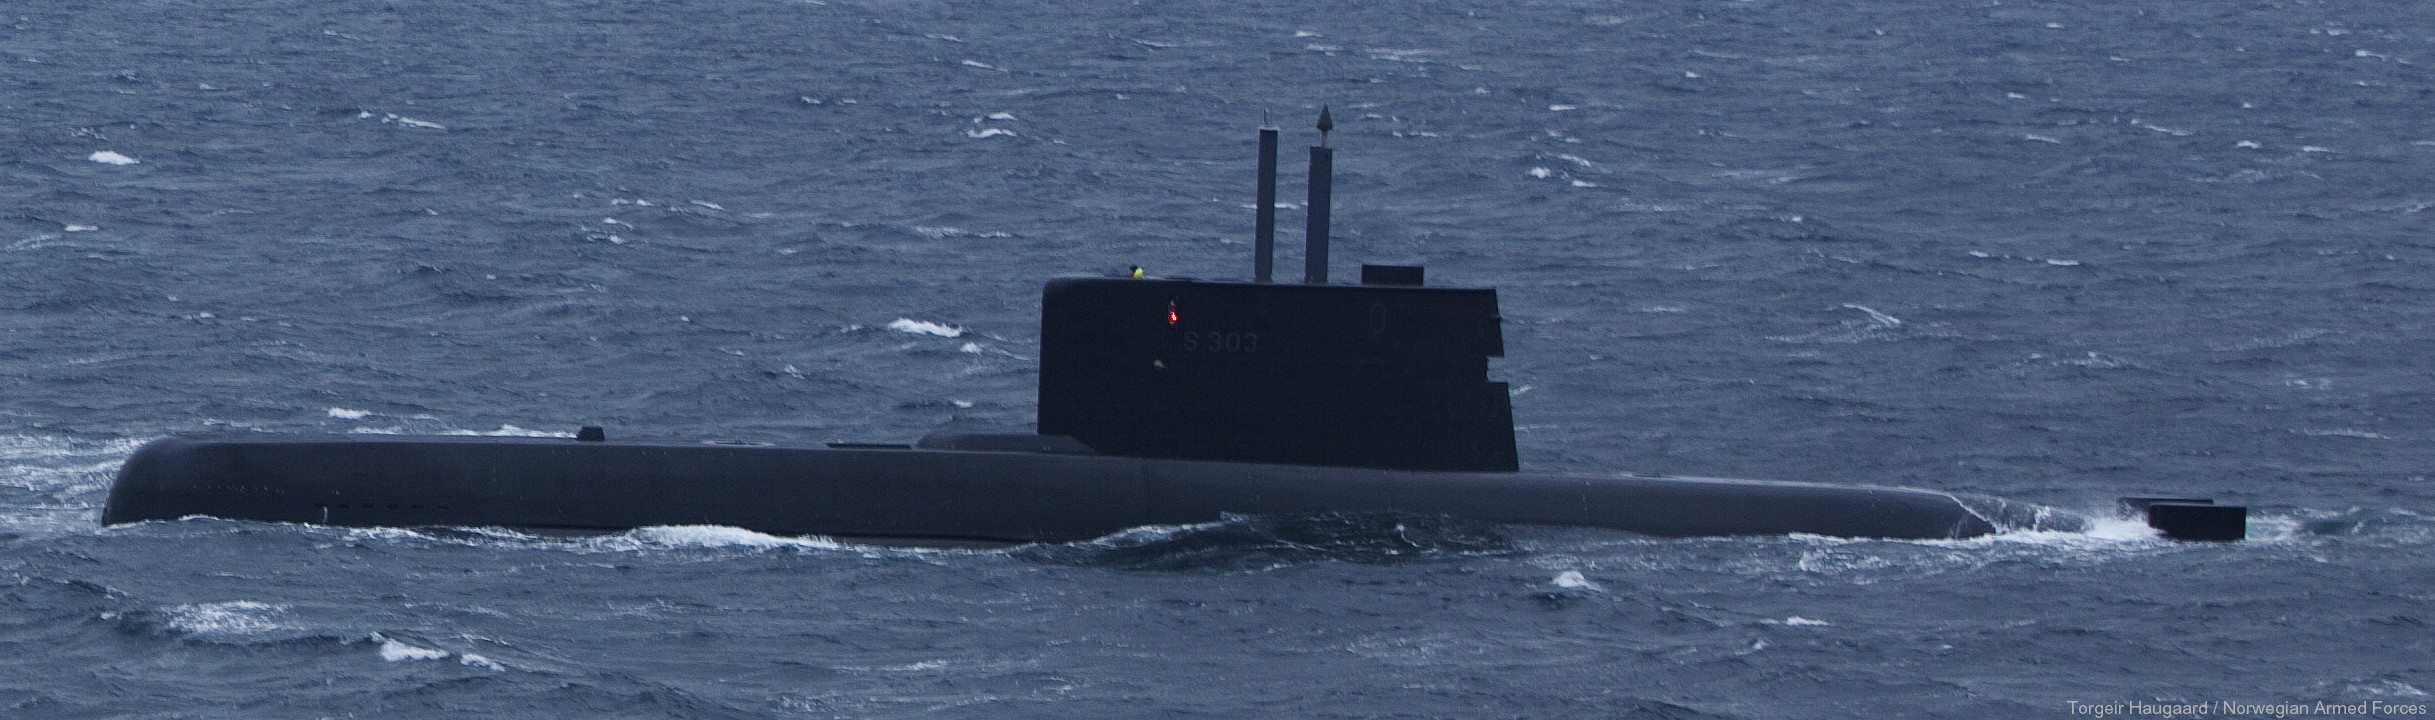 s-303 hnoms knm utvaer ula class submarine type 210 attack ssk undervannsbåt royal norwegian navy sjøforsvaret 02